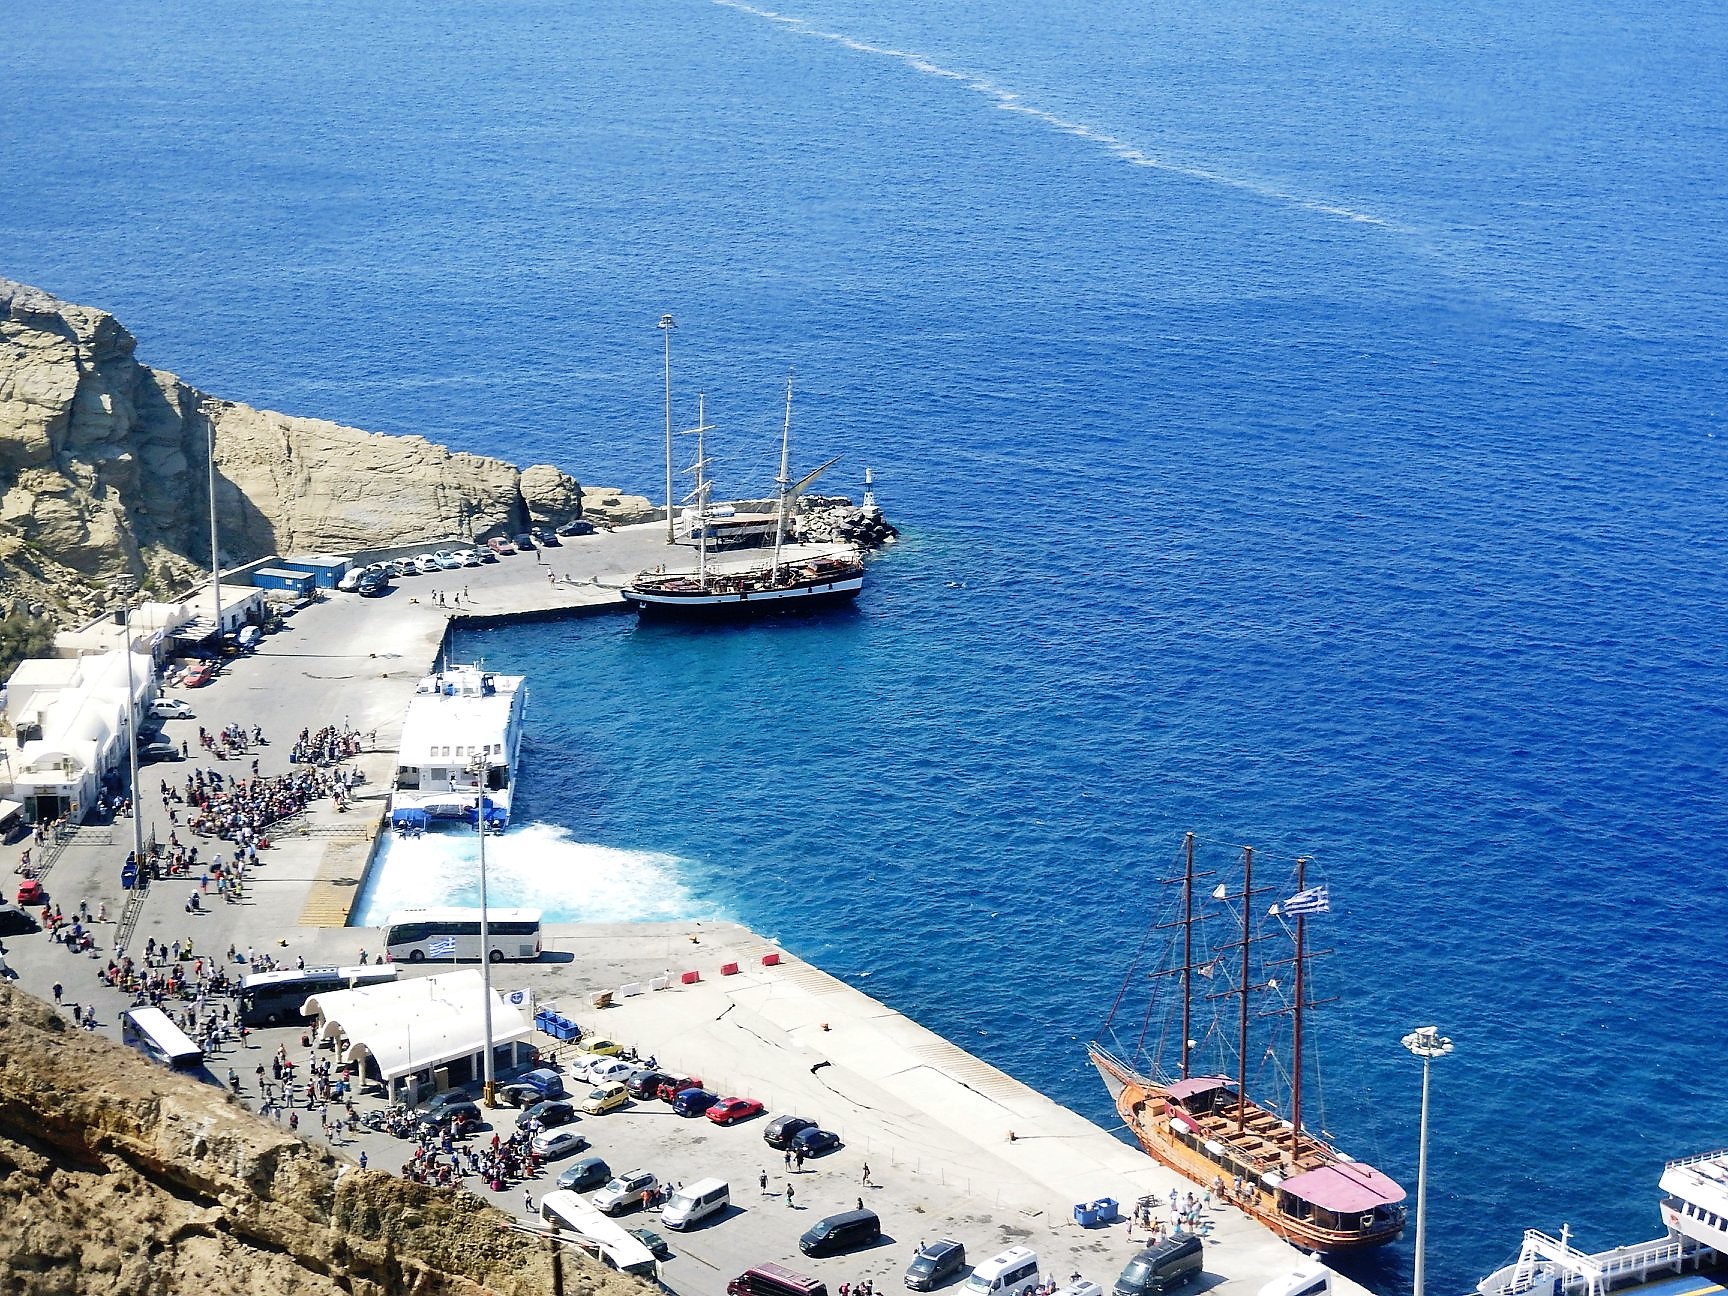 The harbor of Santorini